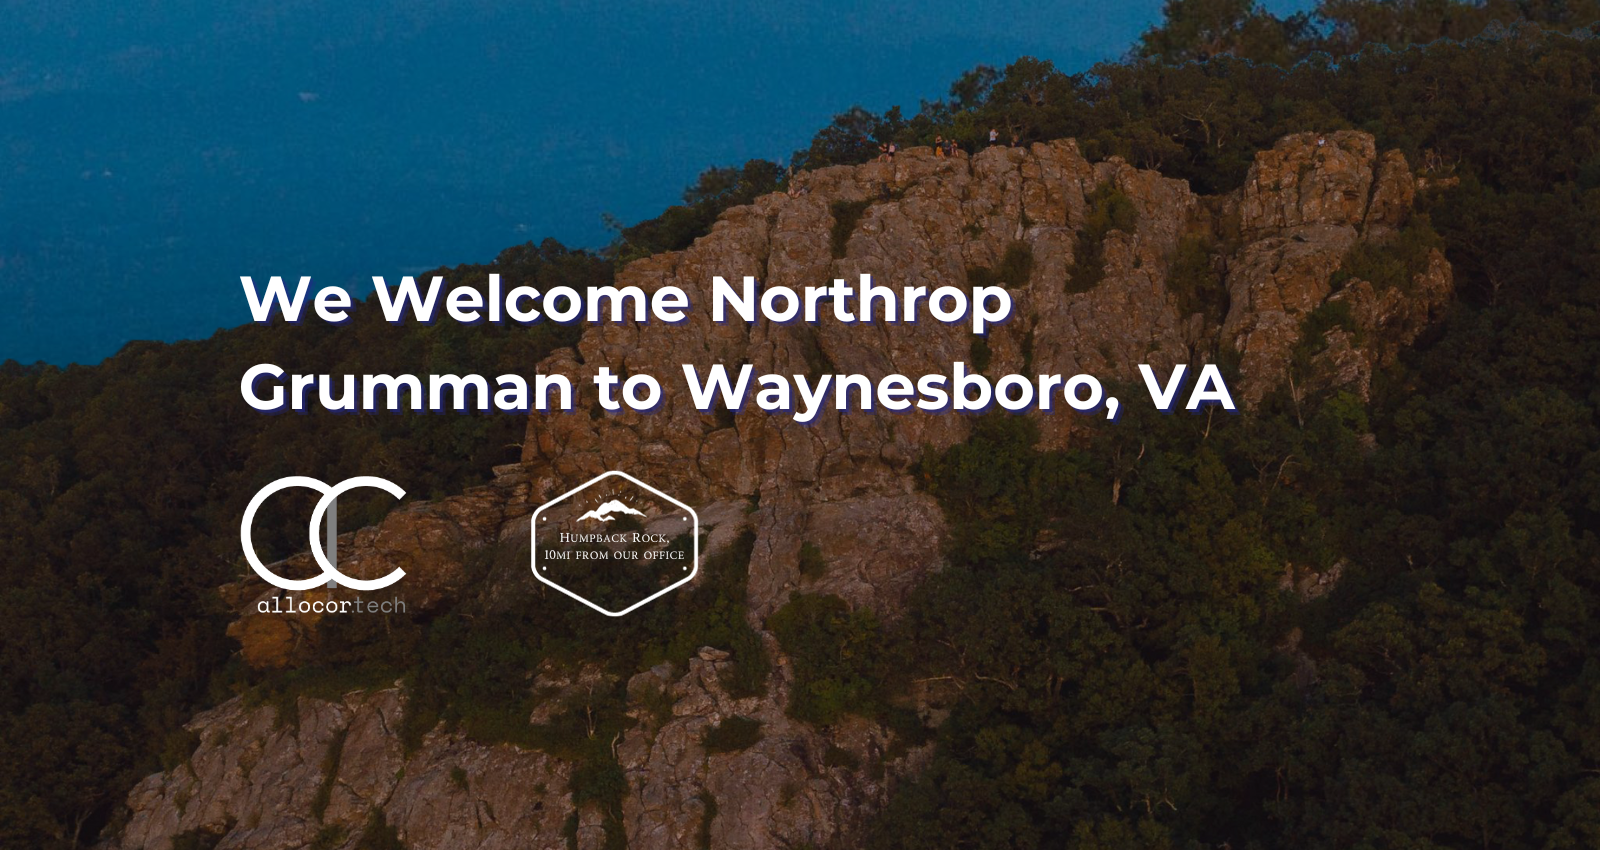 Welcome to the area, Northrop Grumman!